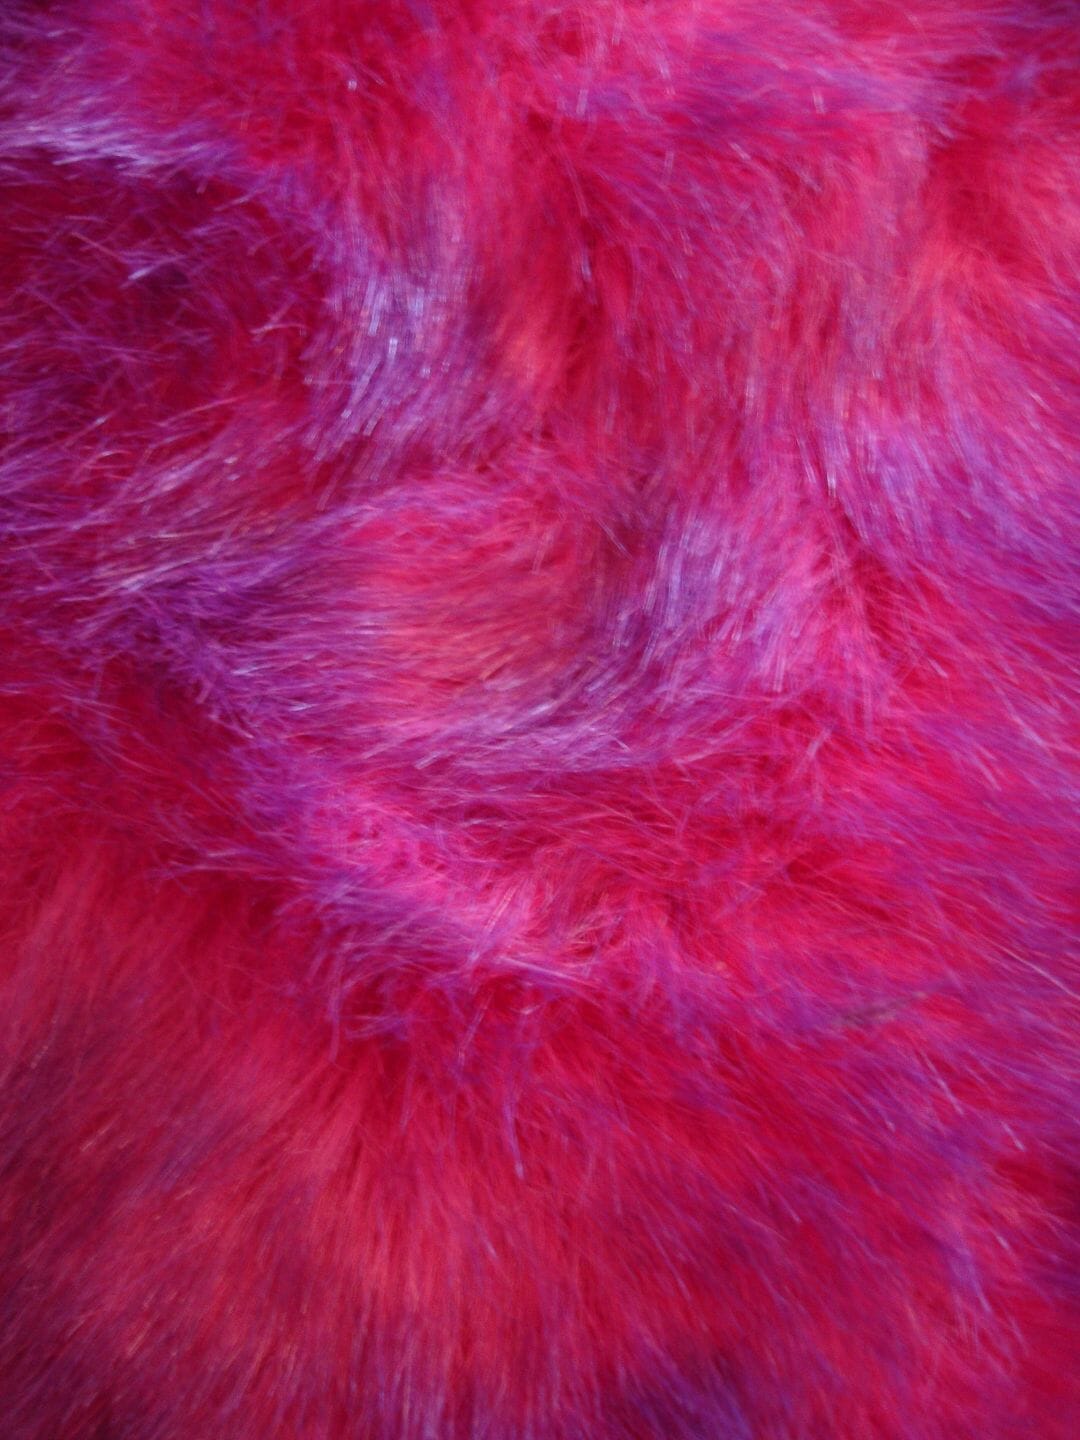 Pink Fur Wallpapers